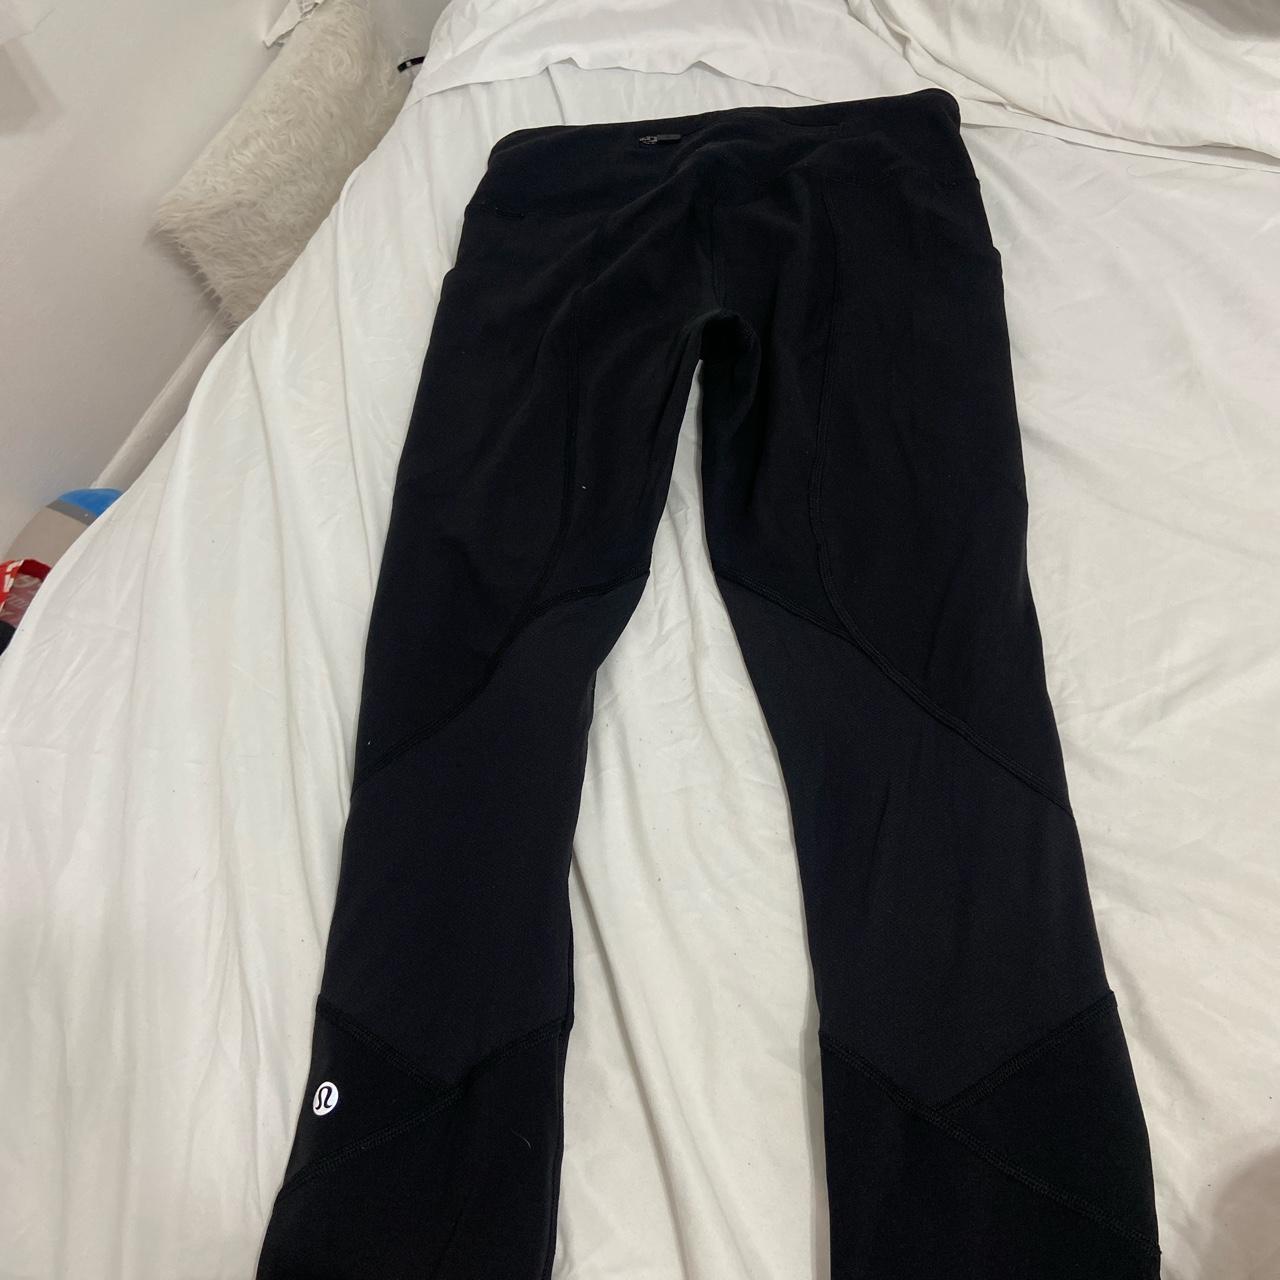 Black Lululemon leggings with pockets size 4 brand new - Depop